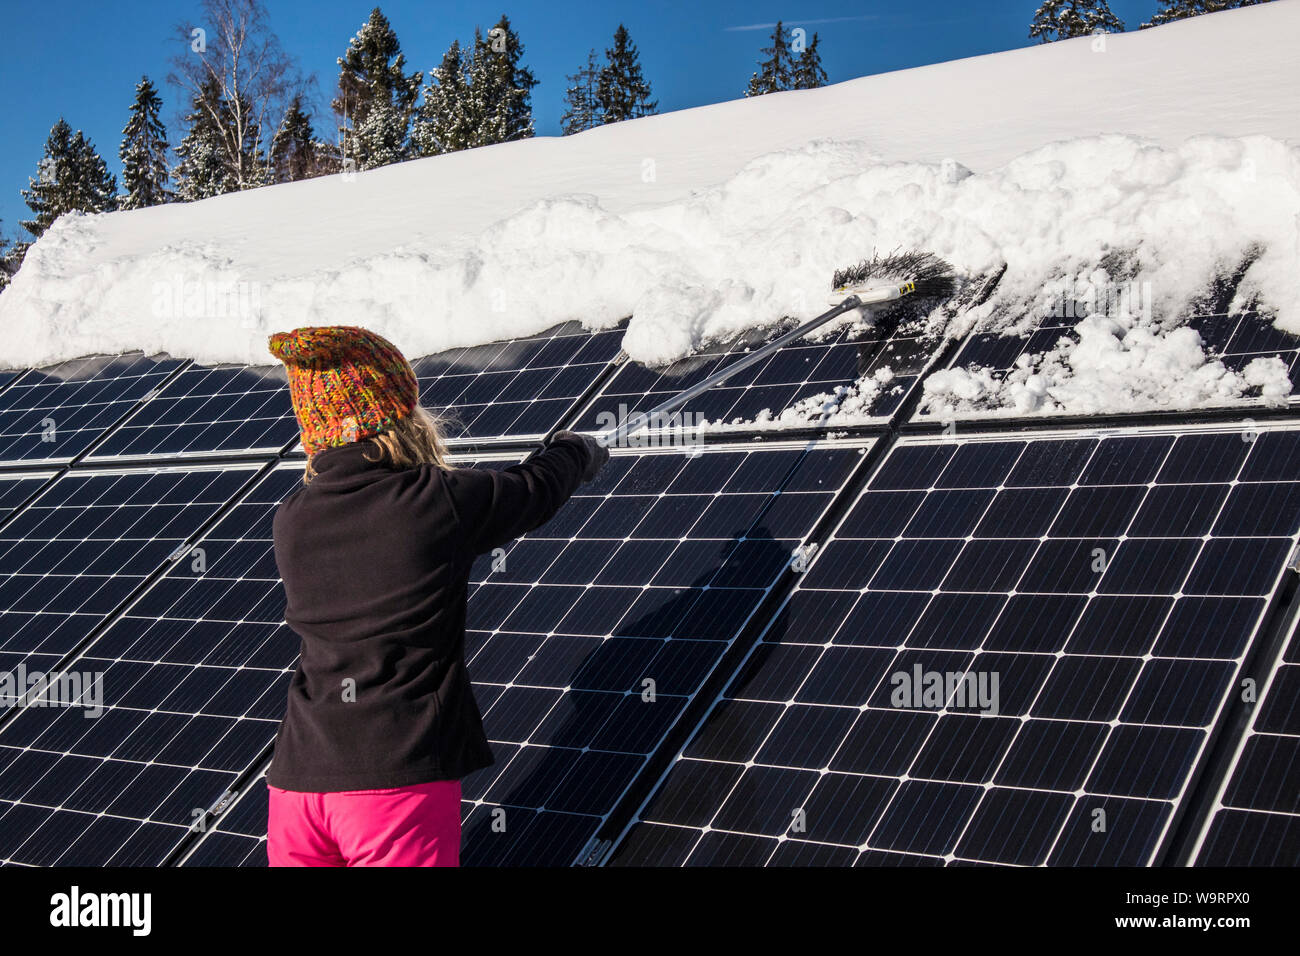 Solar Works in Winter, Snow on Solar Panels